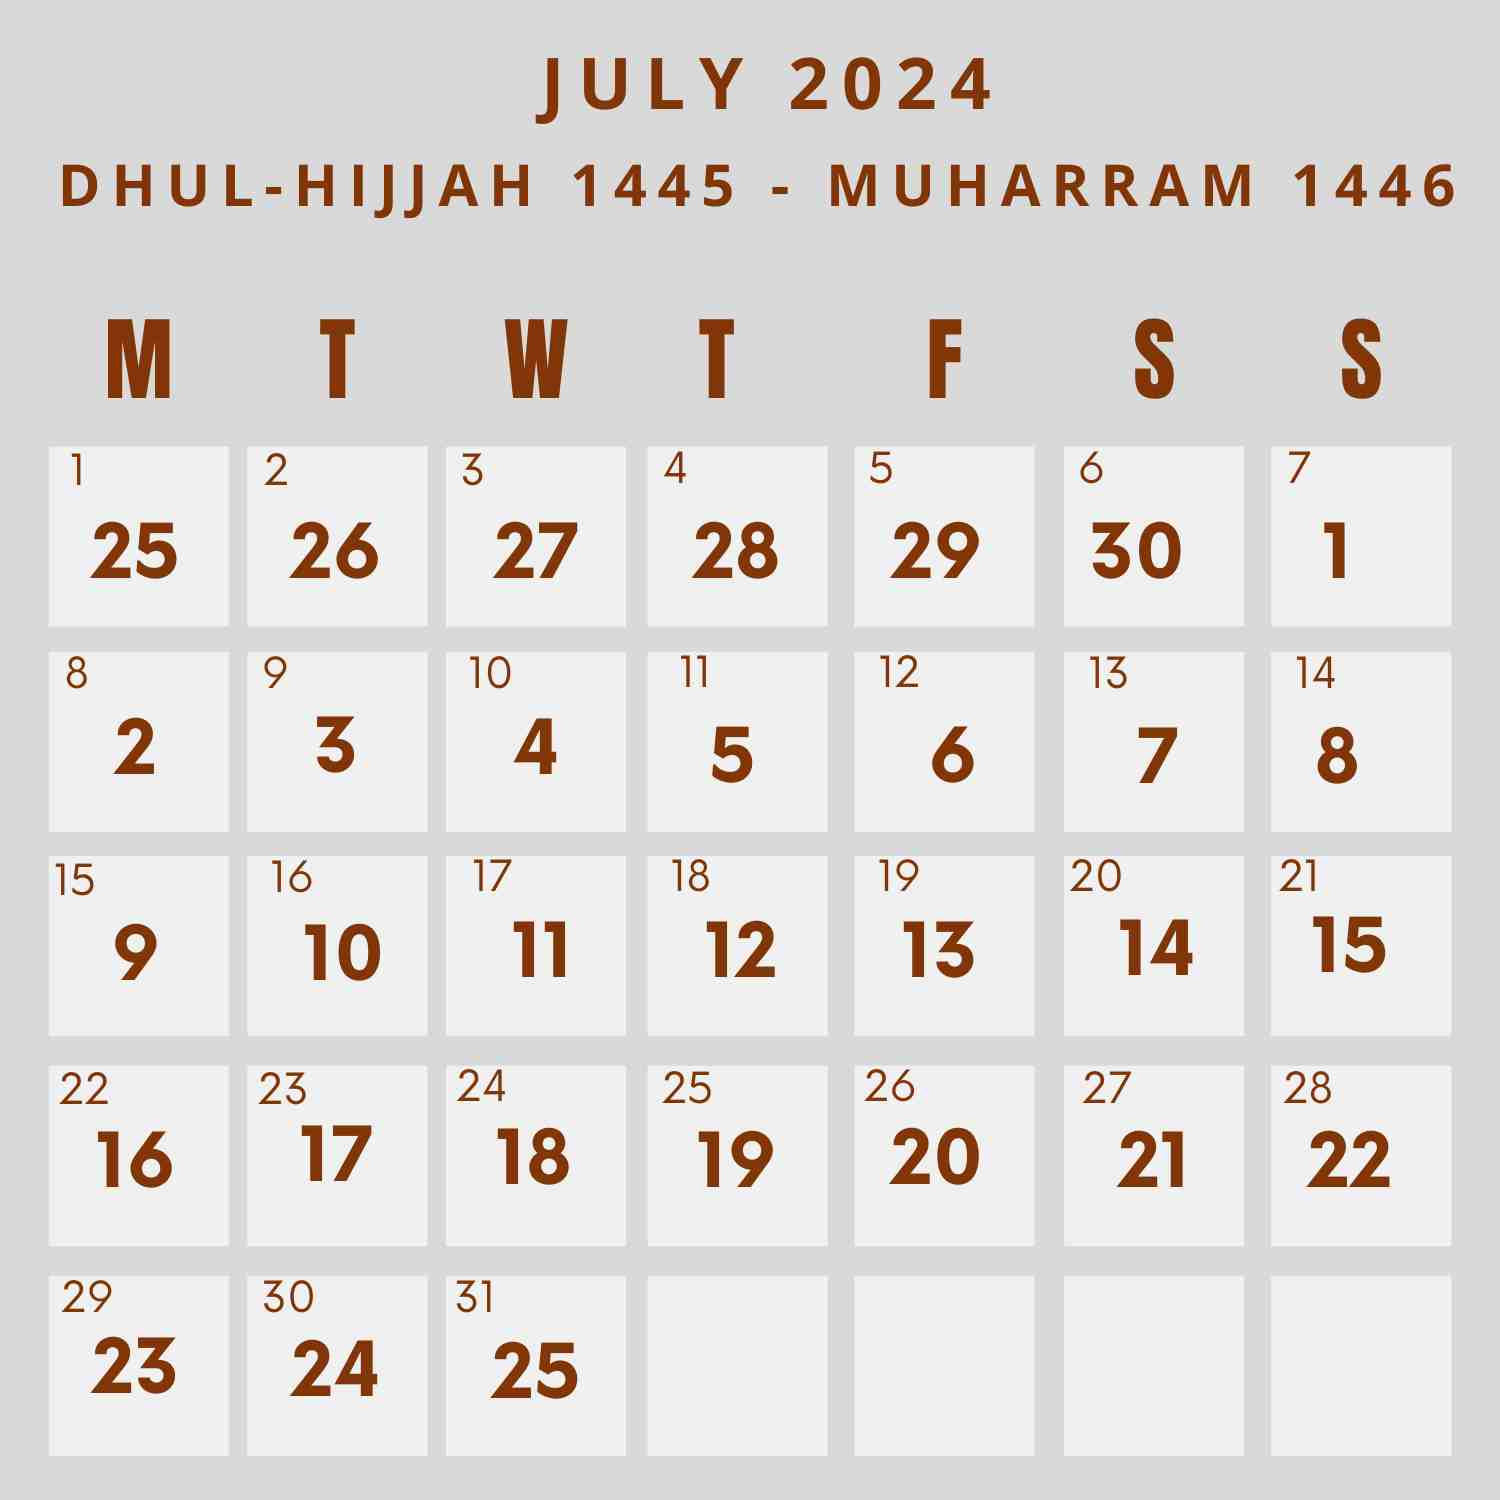 Islamic Calendar 2024 - Khwajadarbar regarding 3 July 2024 in Islamic Calendar